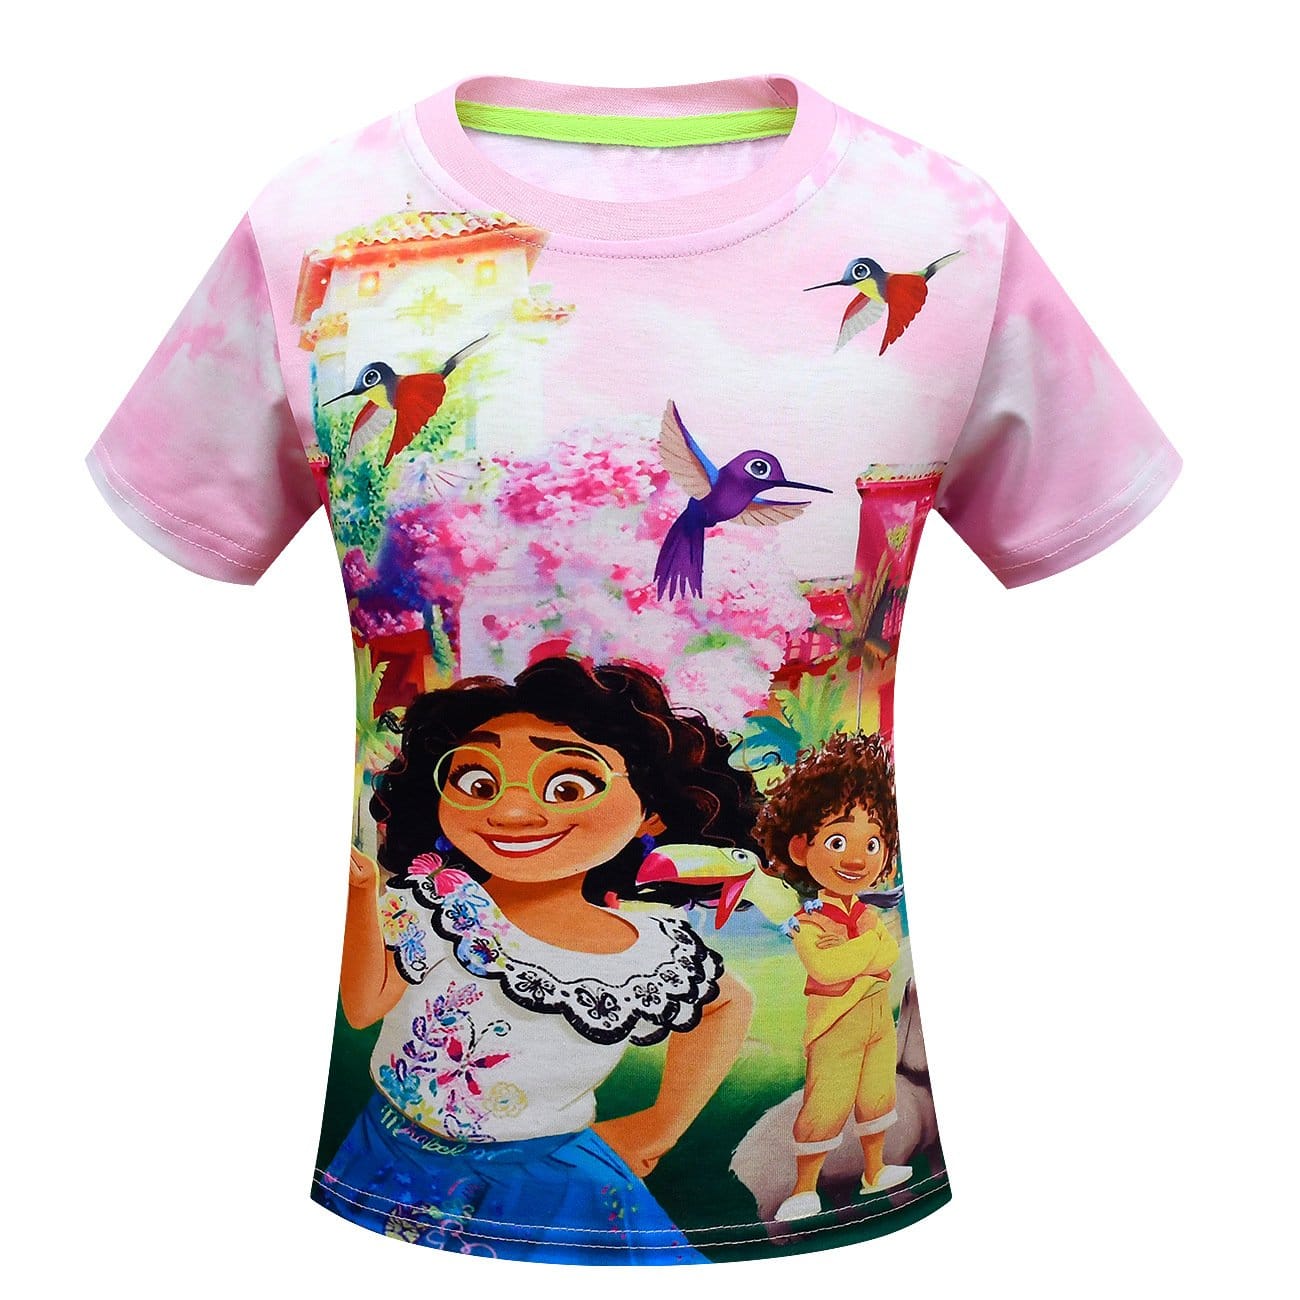 Encanto Shirt Mirabel Print Crew Neck Short Sleeve Top - Pink